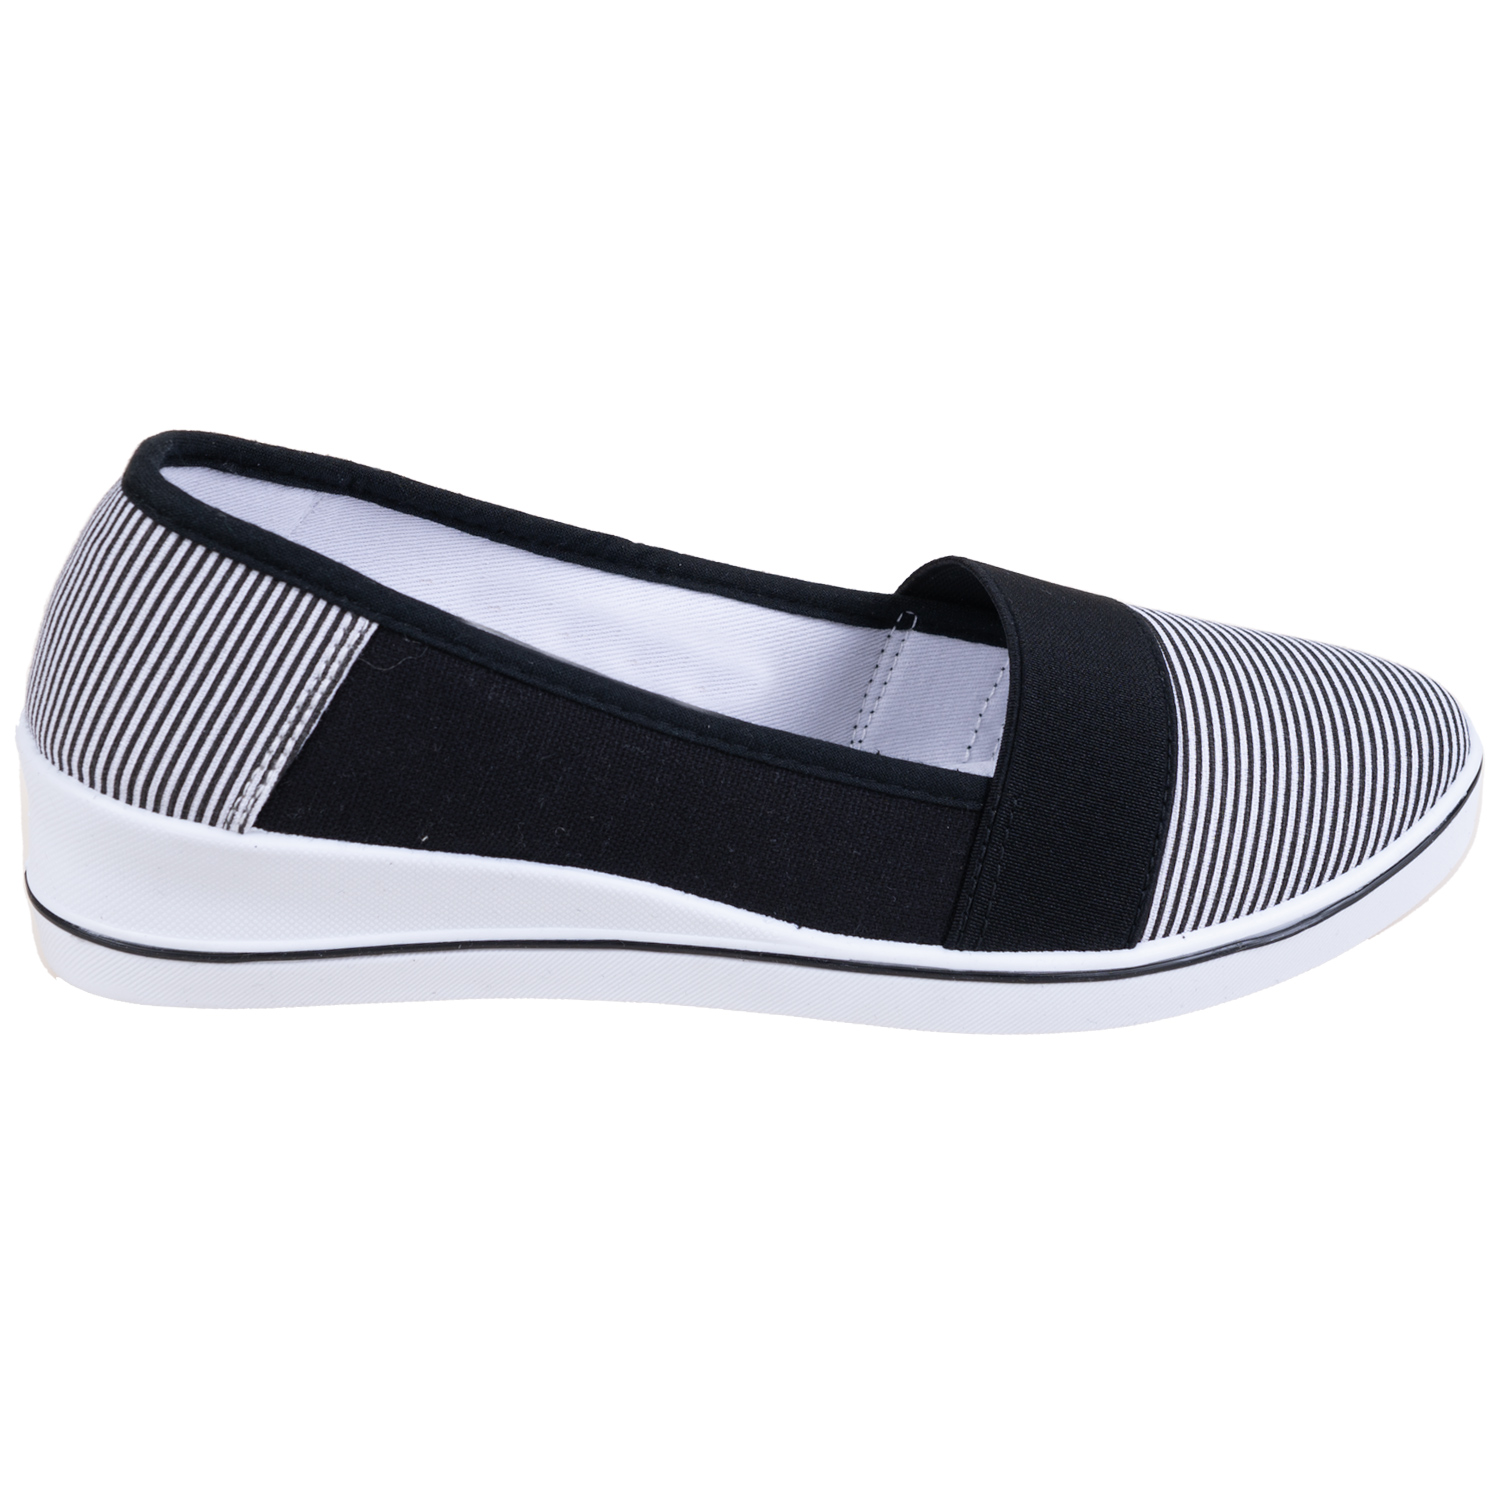 Canvas slip-on wedge shoes - Black stripes